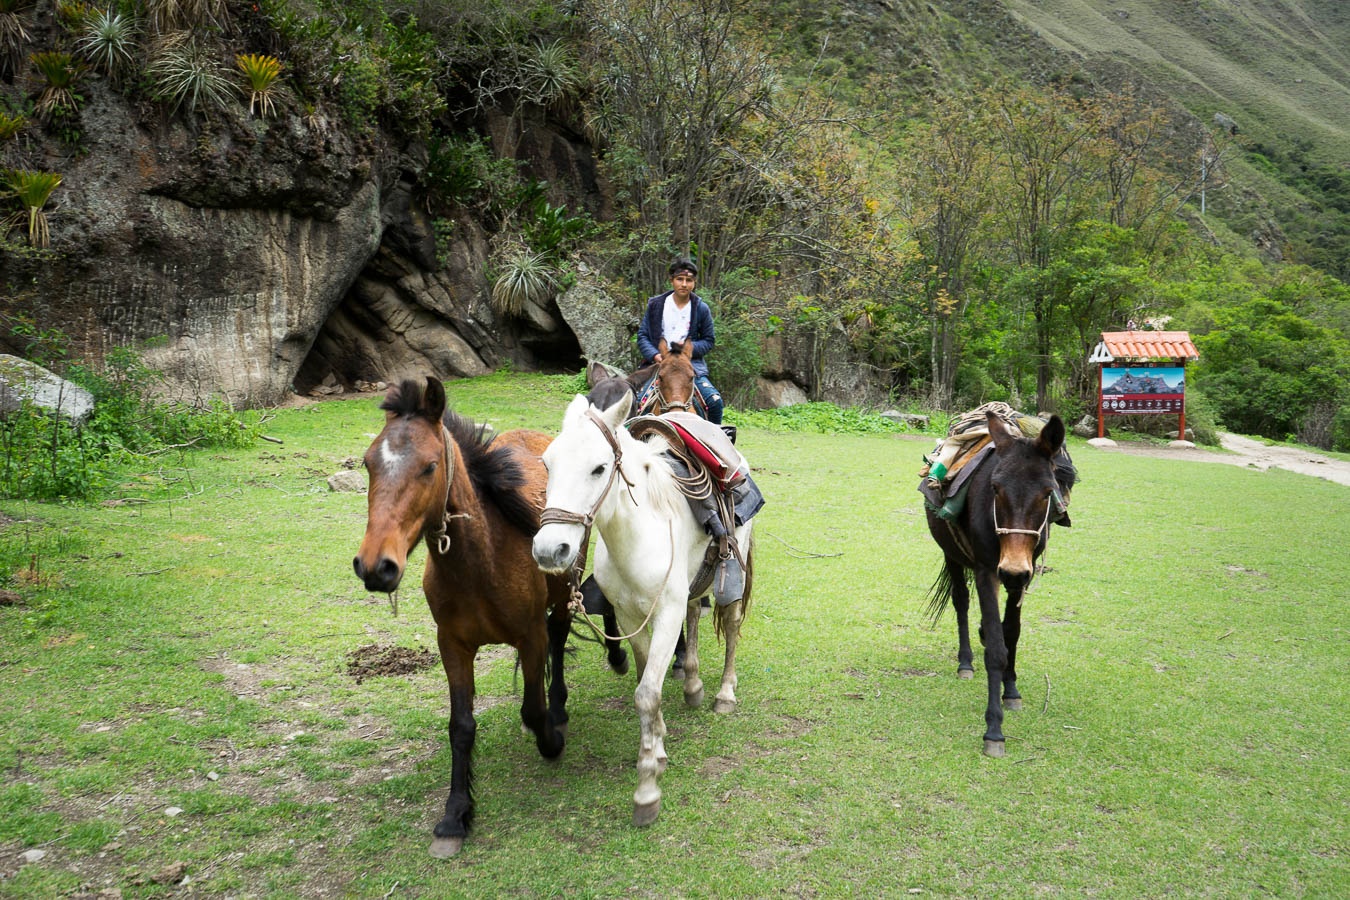 A Peruvian man herds horses